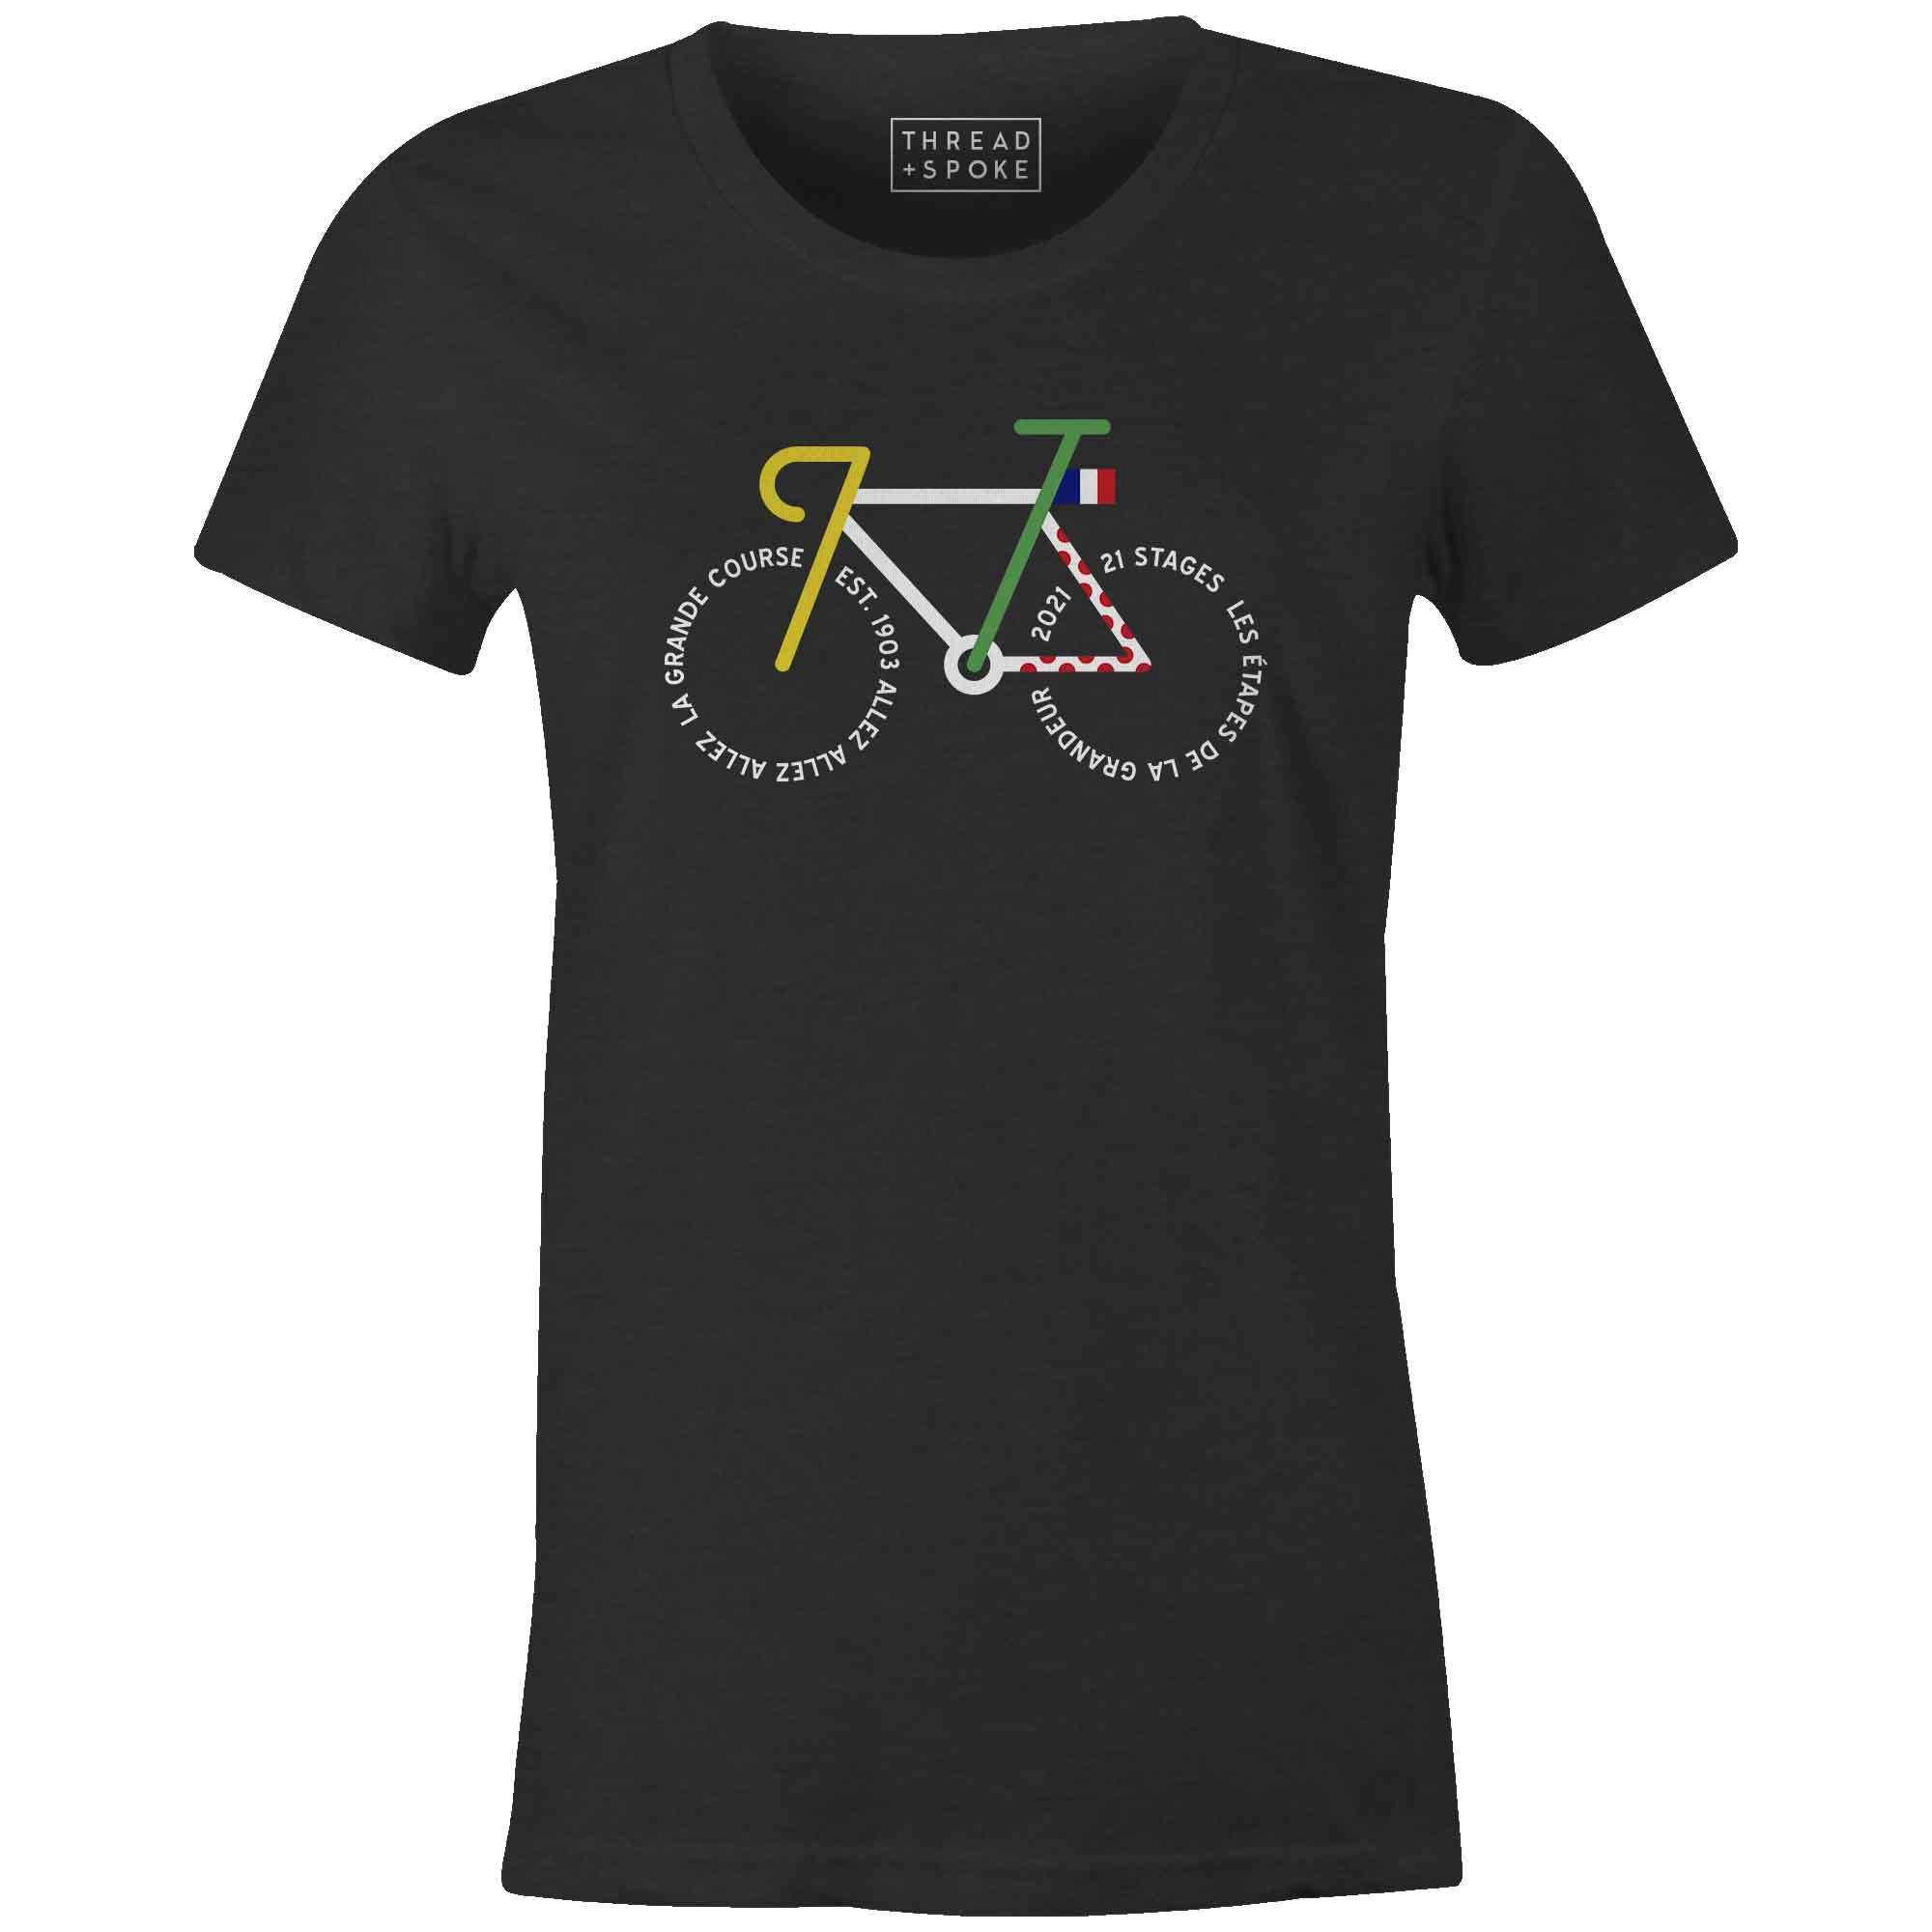 Women's T-shirt - Le Tour Bike